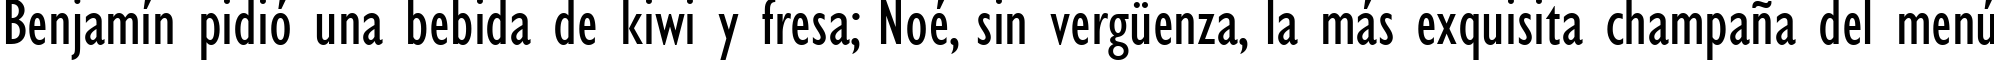 Пример написания шрифтом Gill Sans MT Condensed текста на испанском